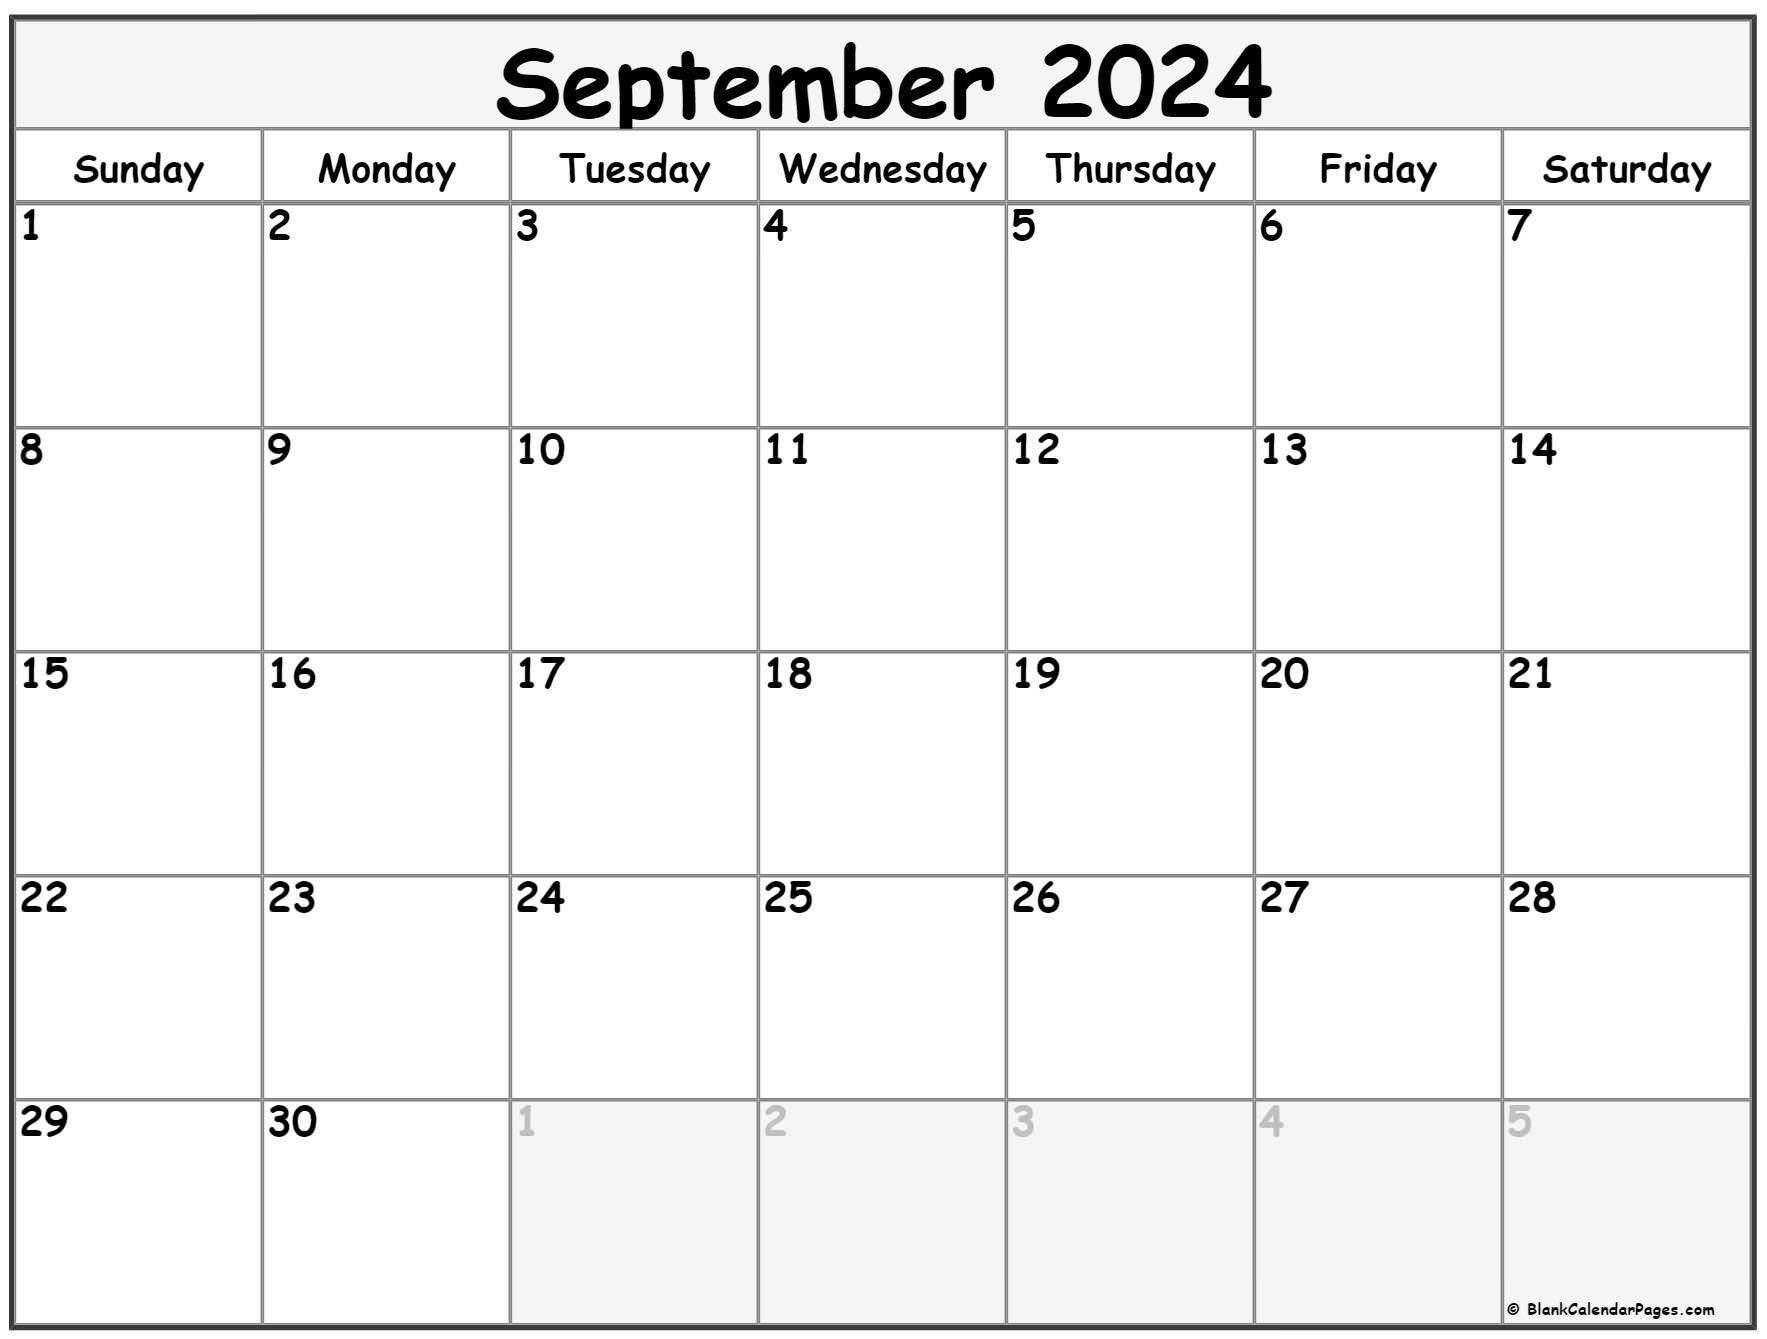 September Blank Calendar Printable prntbl.concejomunicipaldechinu.gov.co